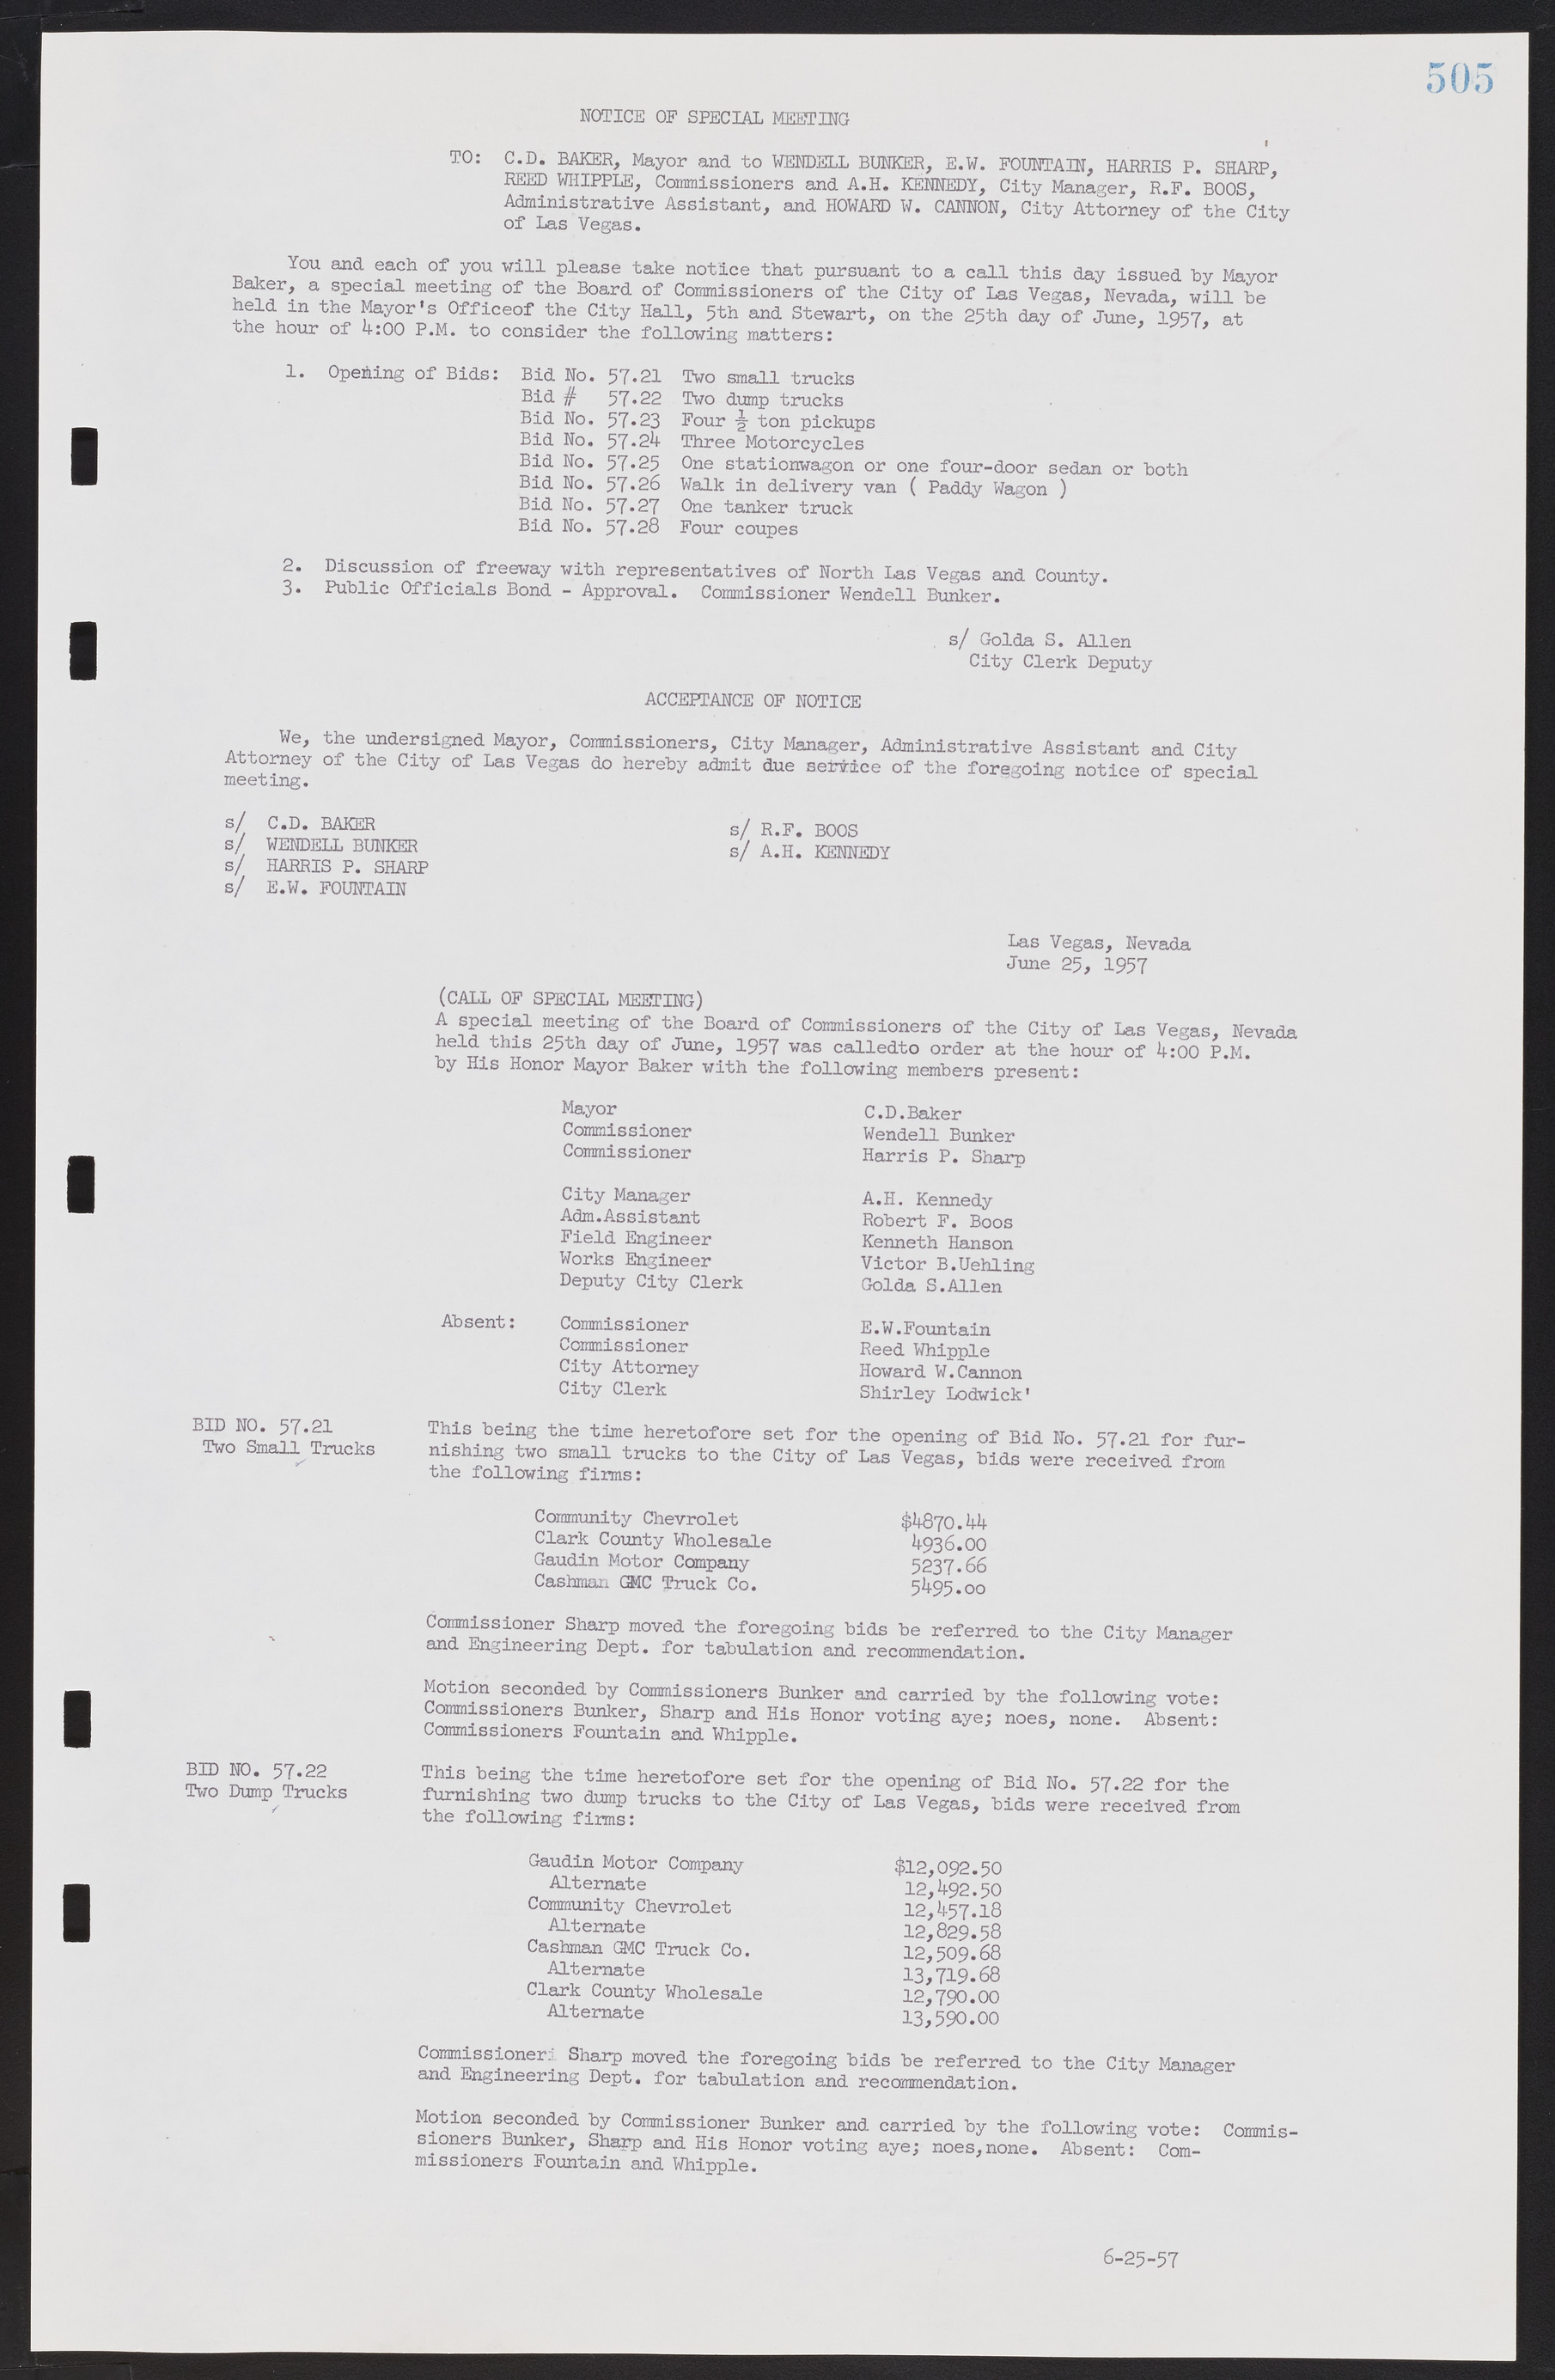 Las Vegas City Commission Minutes, September 21, 1955 to November 20, 1957, lvc000010-525